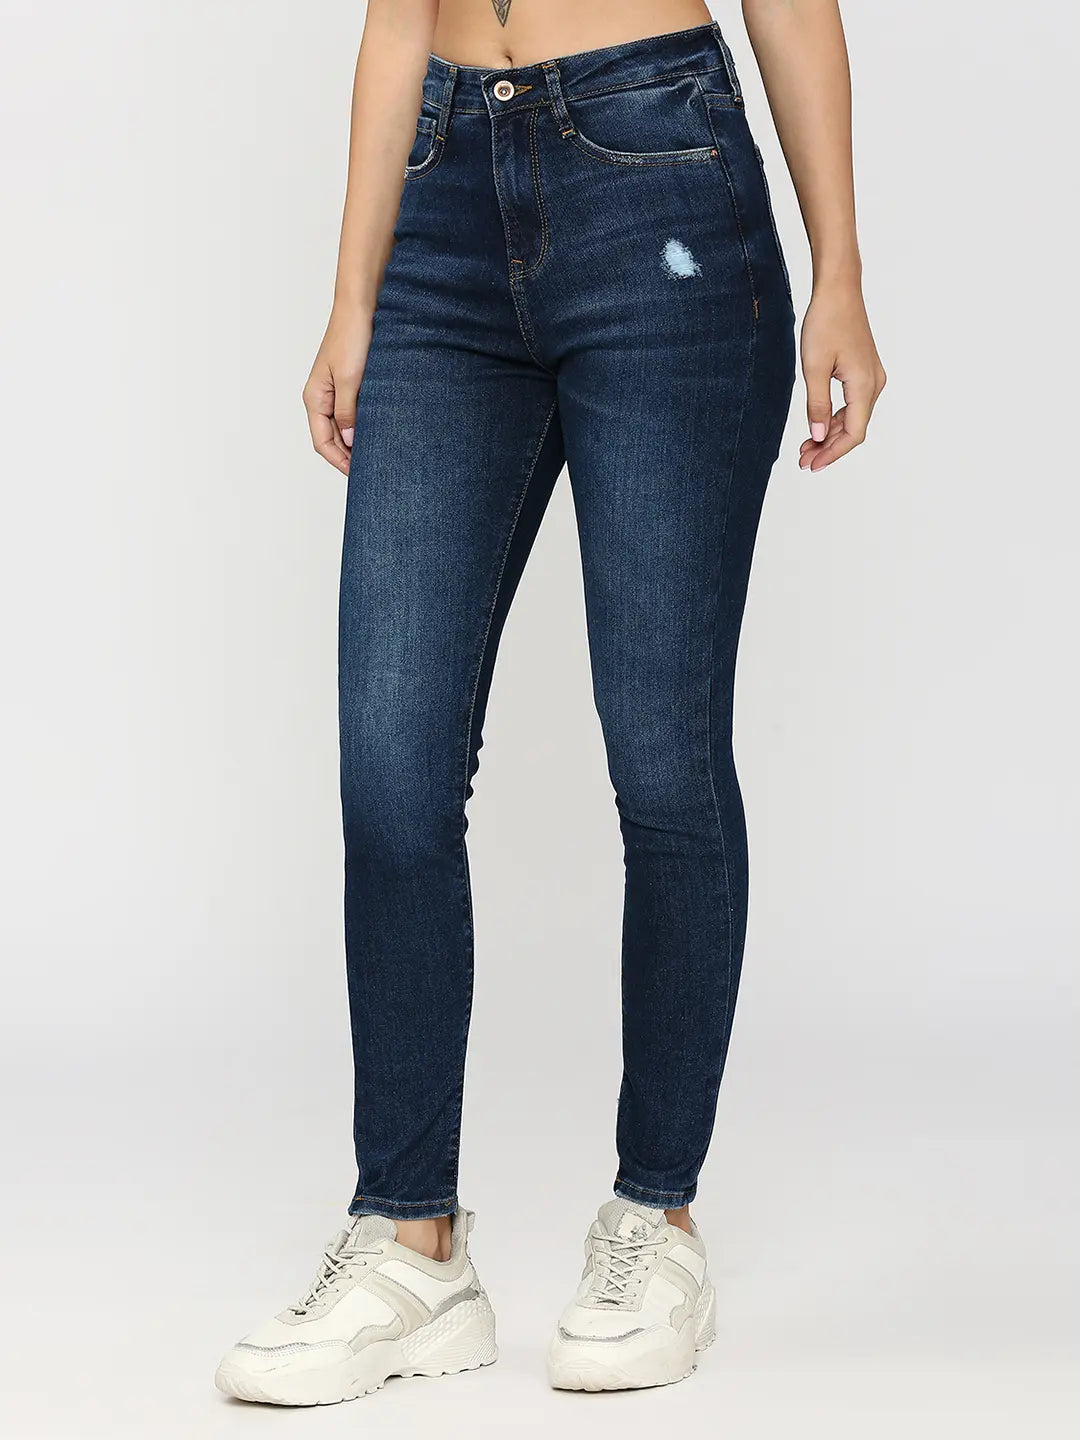 Slim Jeans For Women Skinny High| Alibaba.com